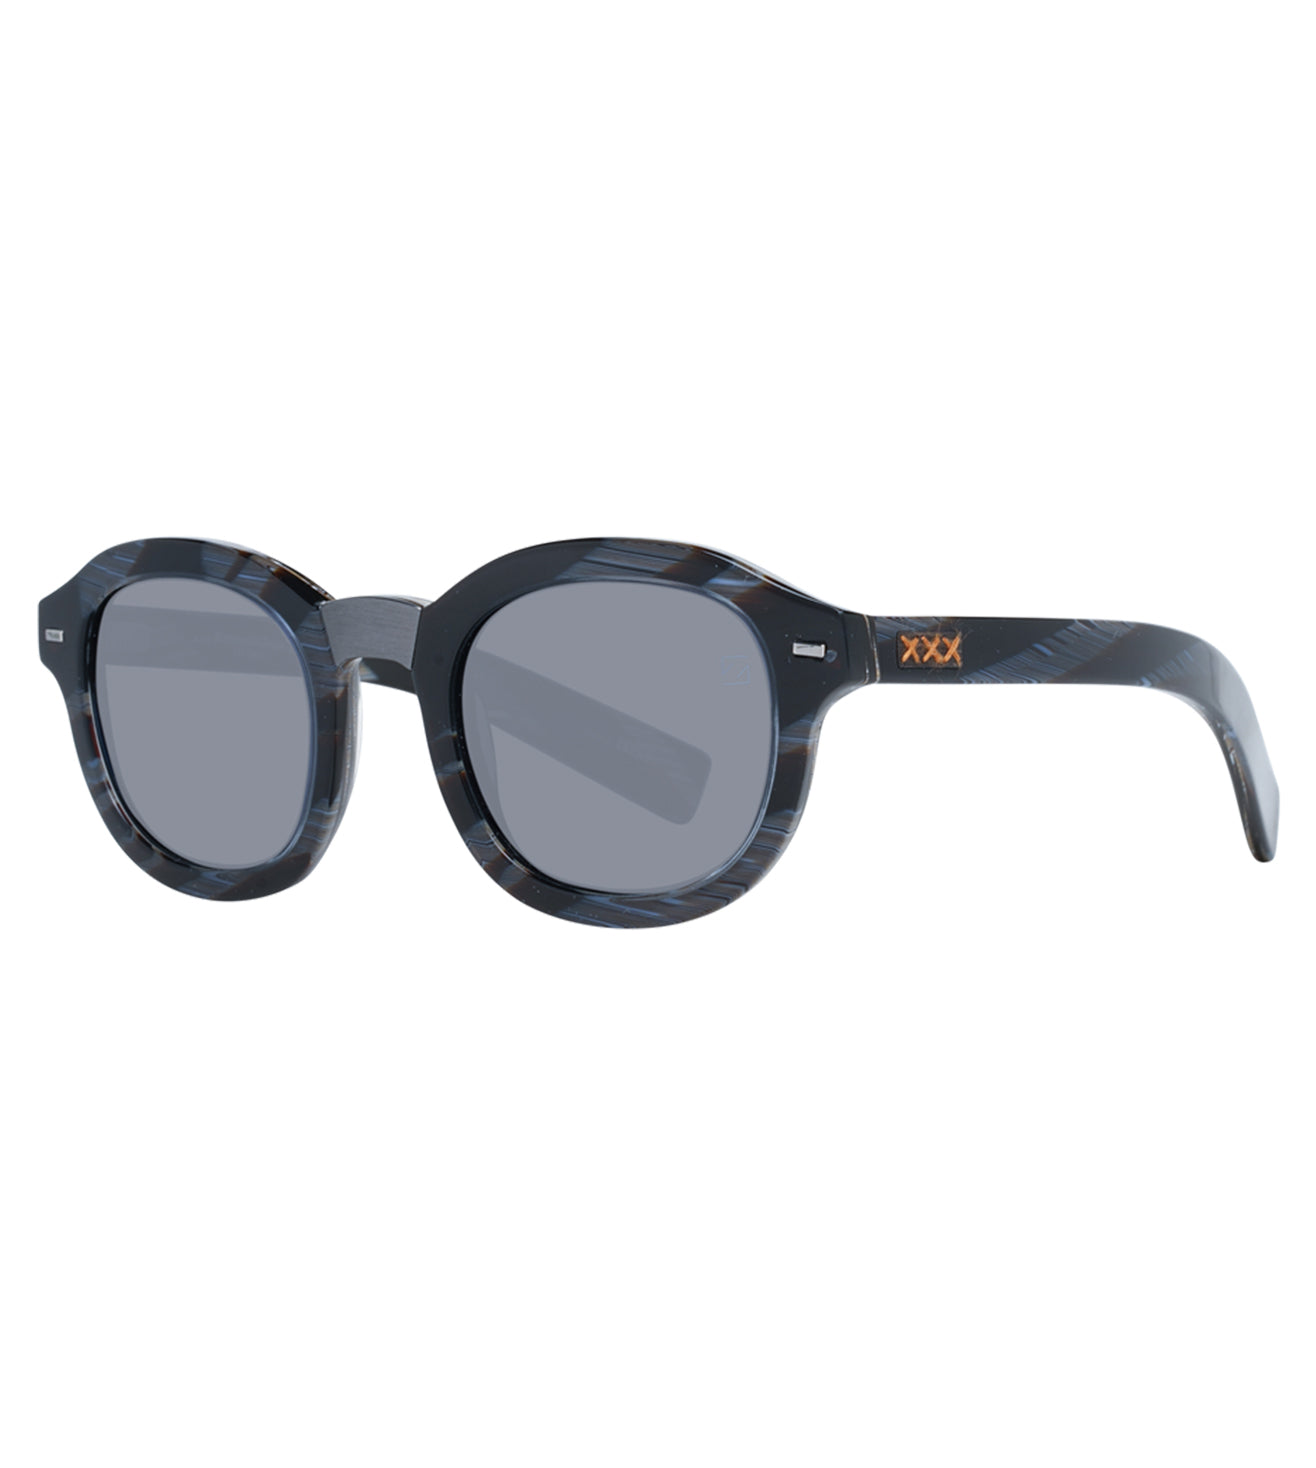 Zegna Men's Grey Round Sunglasses